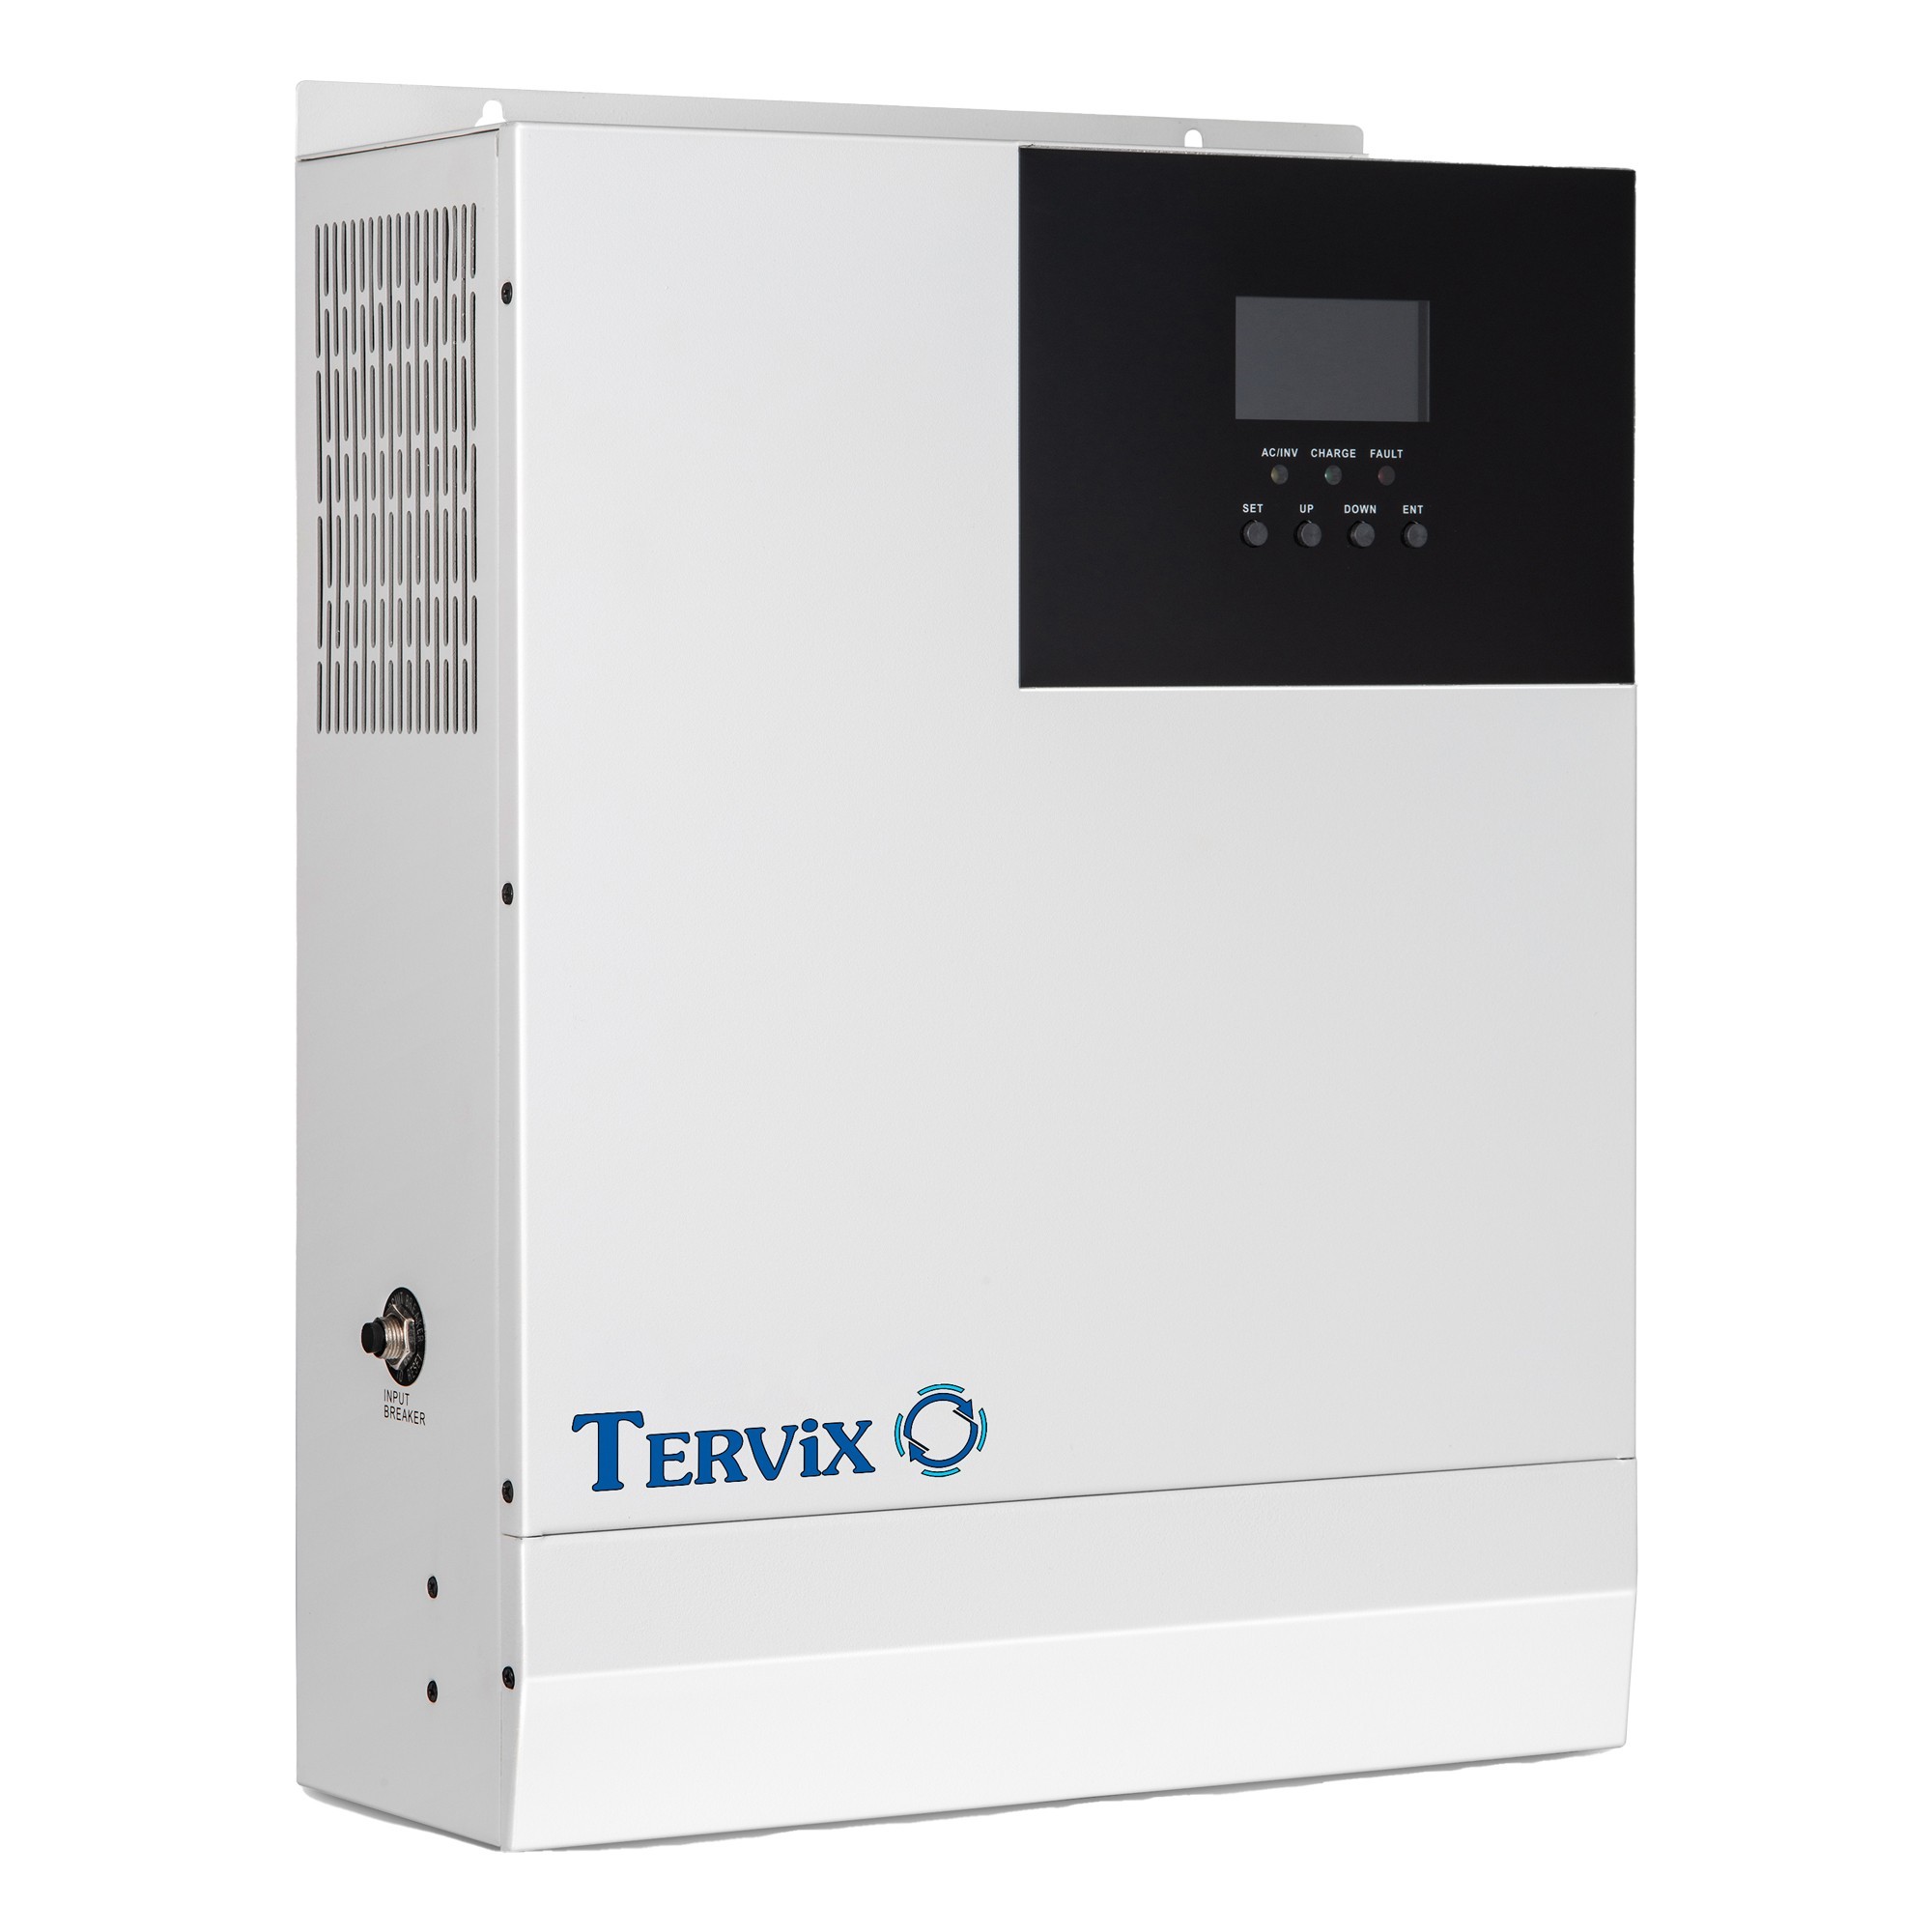 Система автономного питания Tervix BANKA 20,4 кВтч - инвертор 5кВт + аккумулятор 51,2В 200 Ач (2 шт) 693542 цена 416520 грн - фотография 2